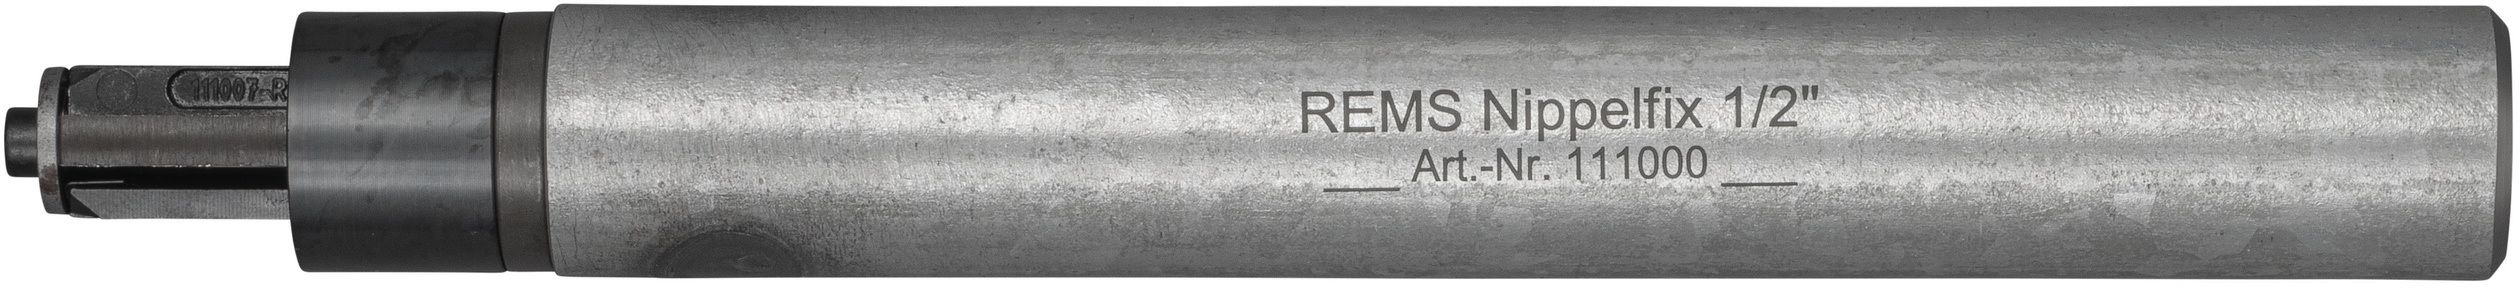 REMS Nippelfix 111400, 11/2" - Sanitärwerkzeuge